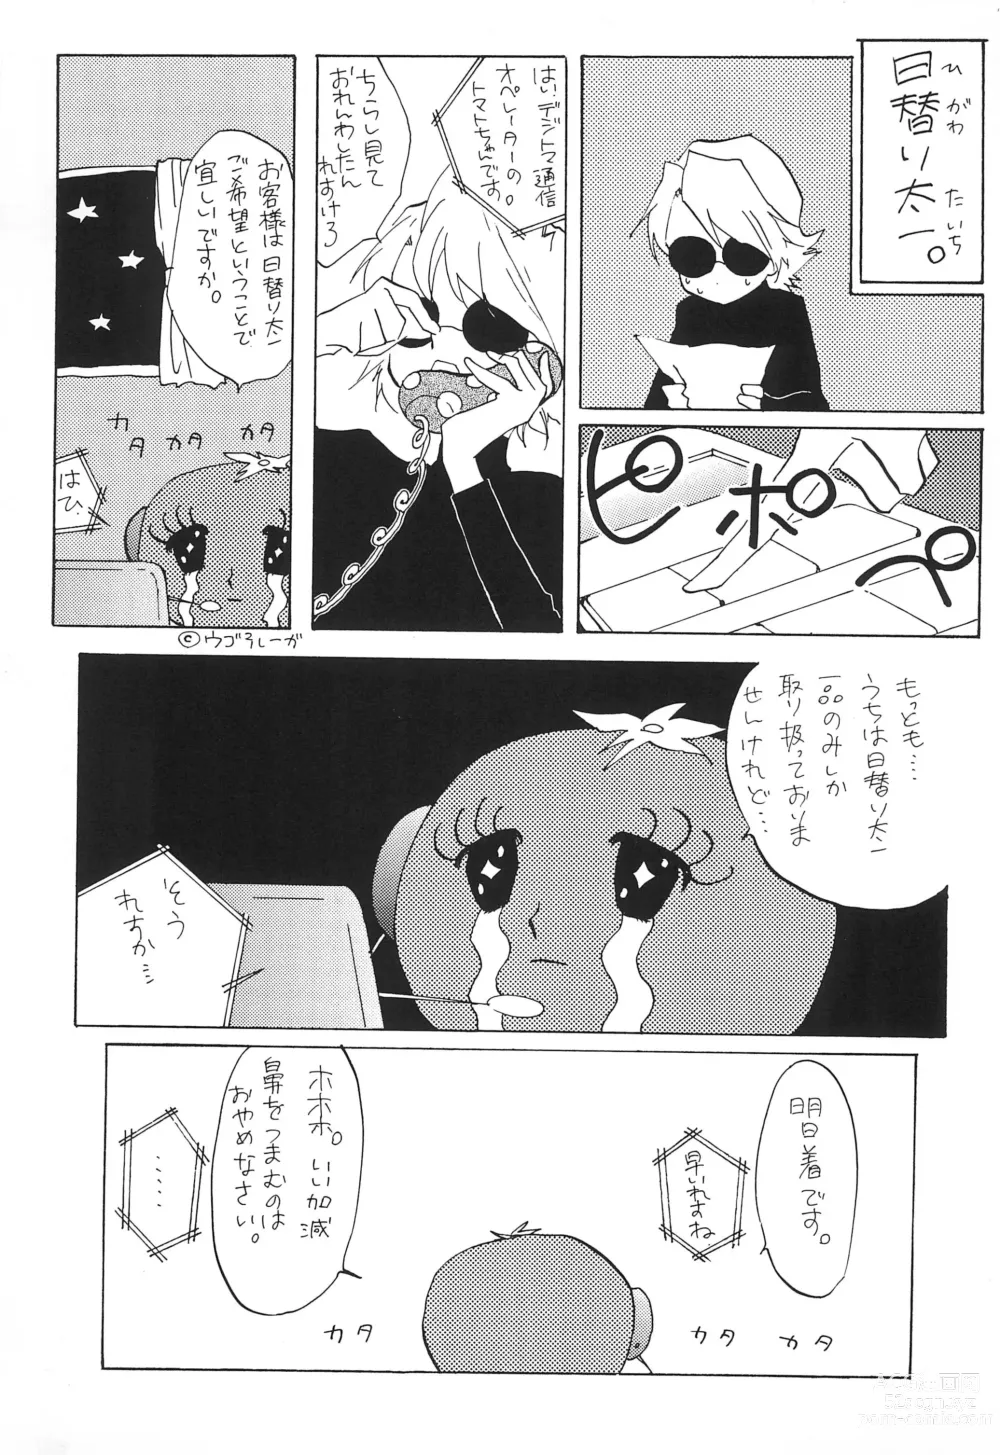 Page 7 of doujinshi MARGINAL SEX